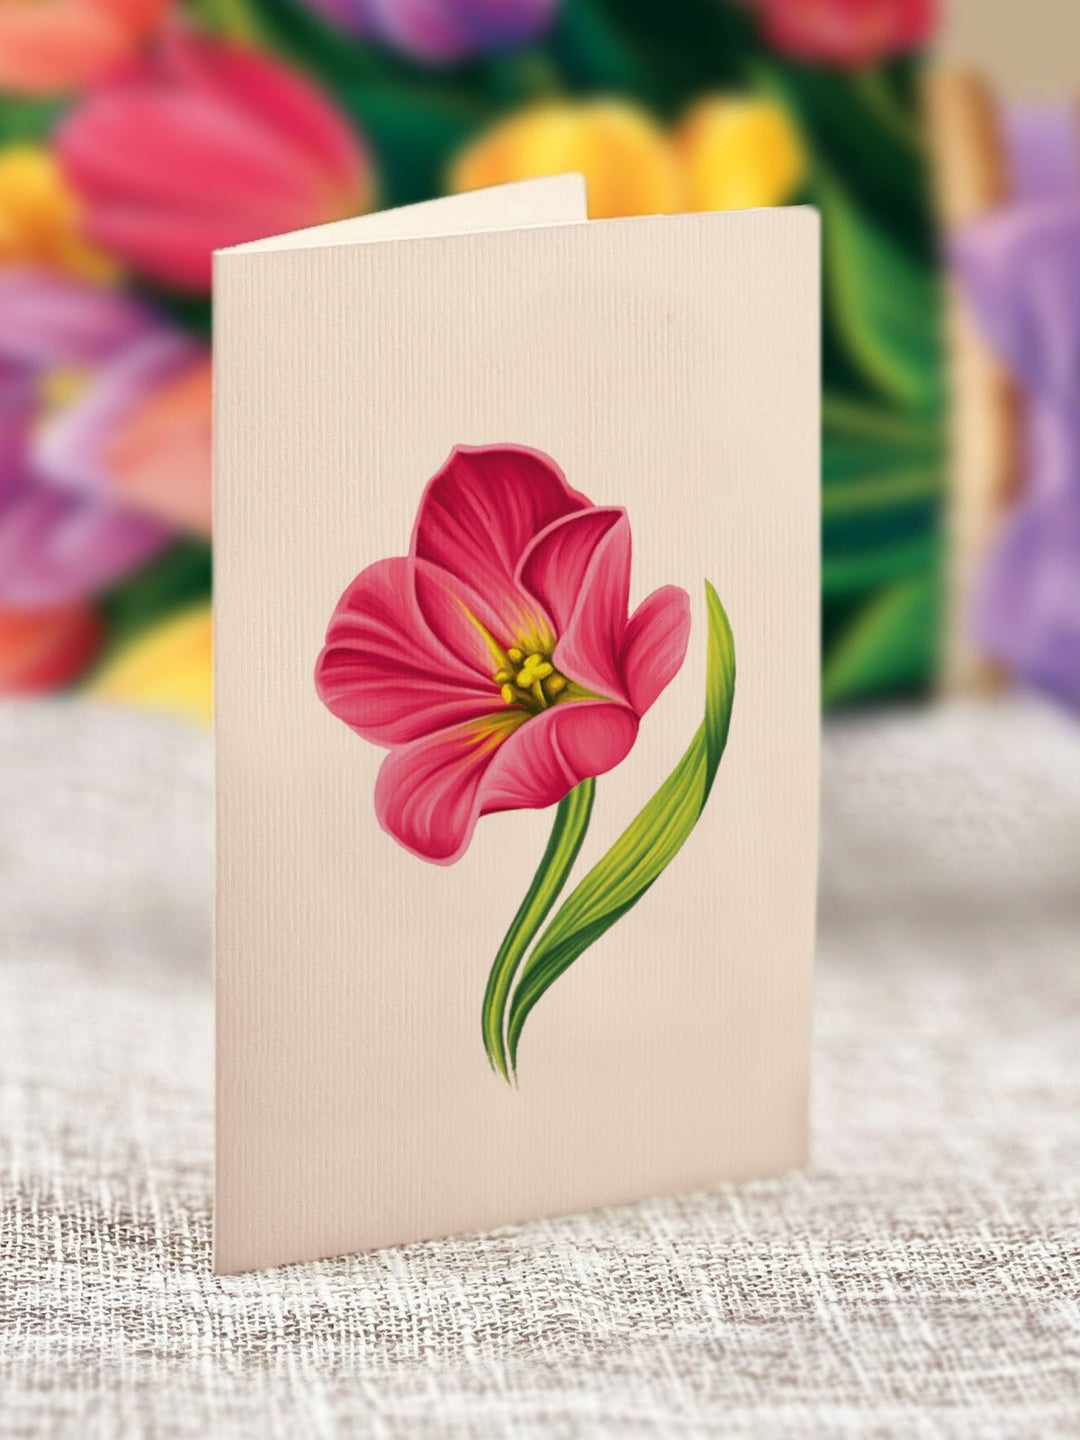 Festive Tulips - FreshCut Paper